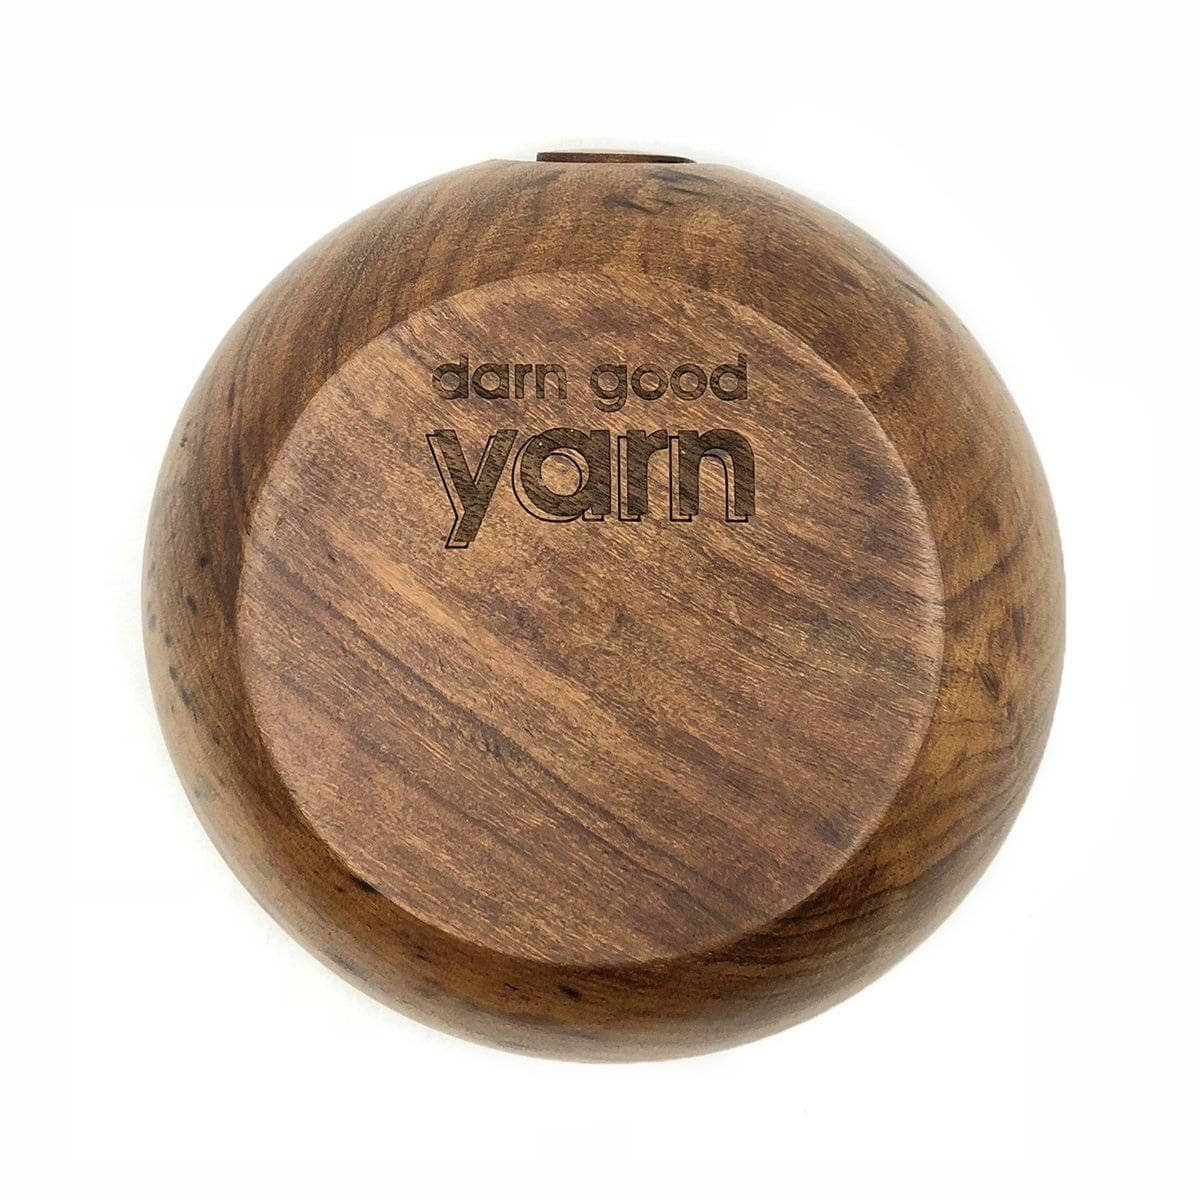 6” Sheesham Wood Yarn Bowl 6x3.50 by K+C by K+C